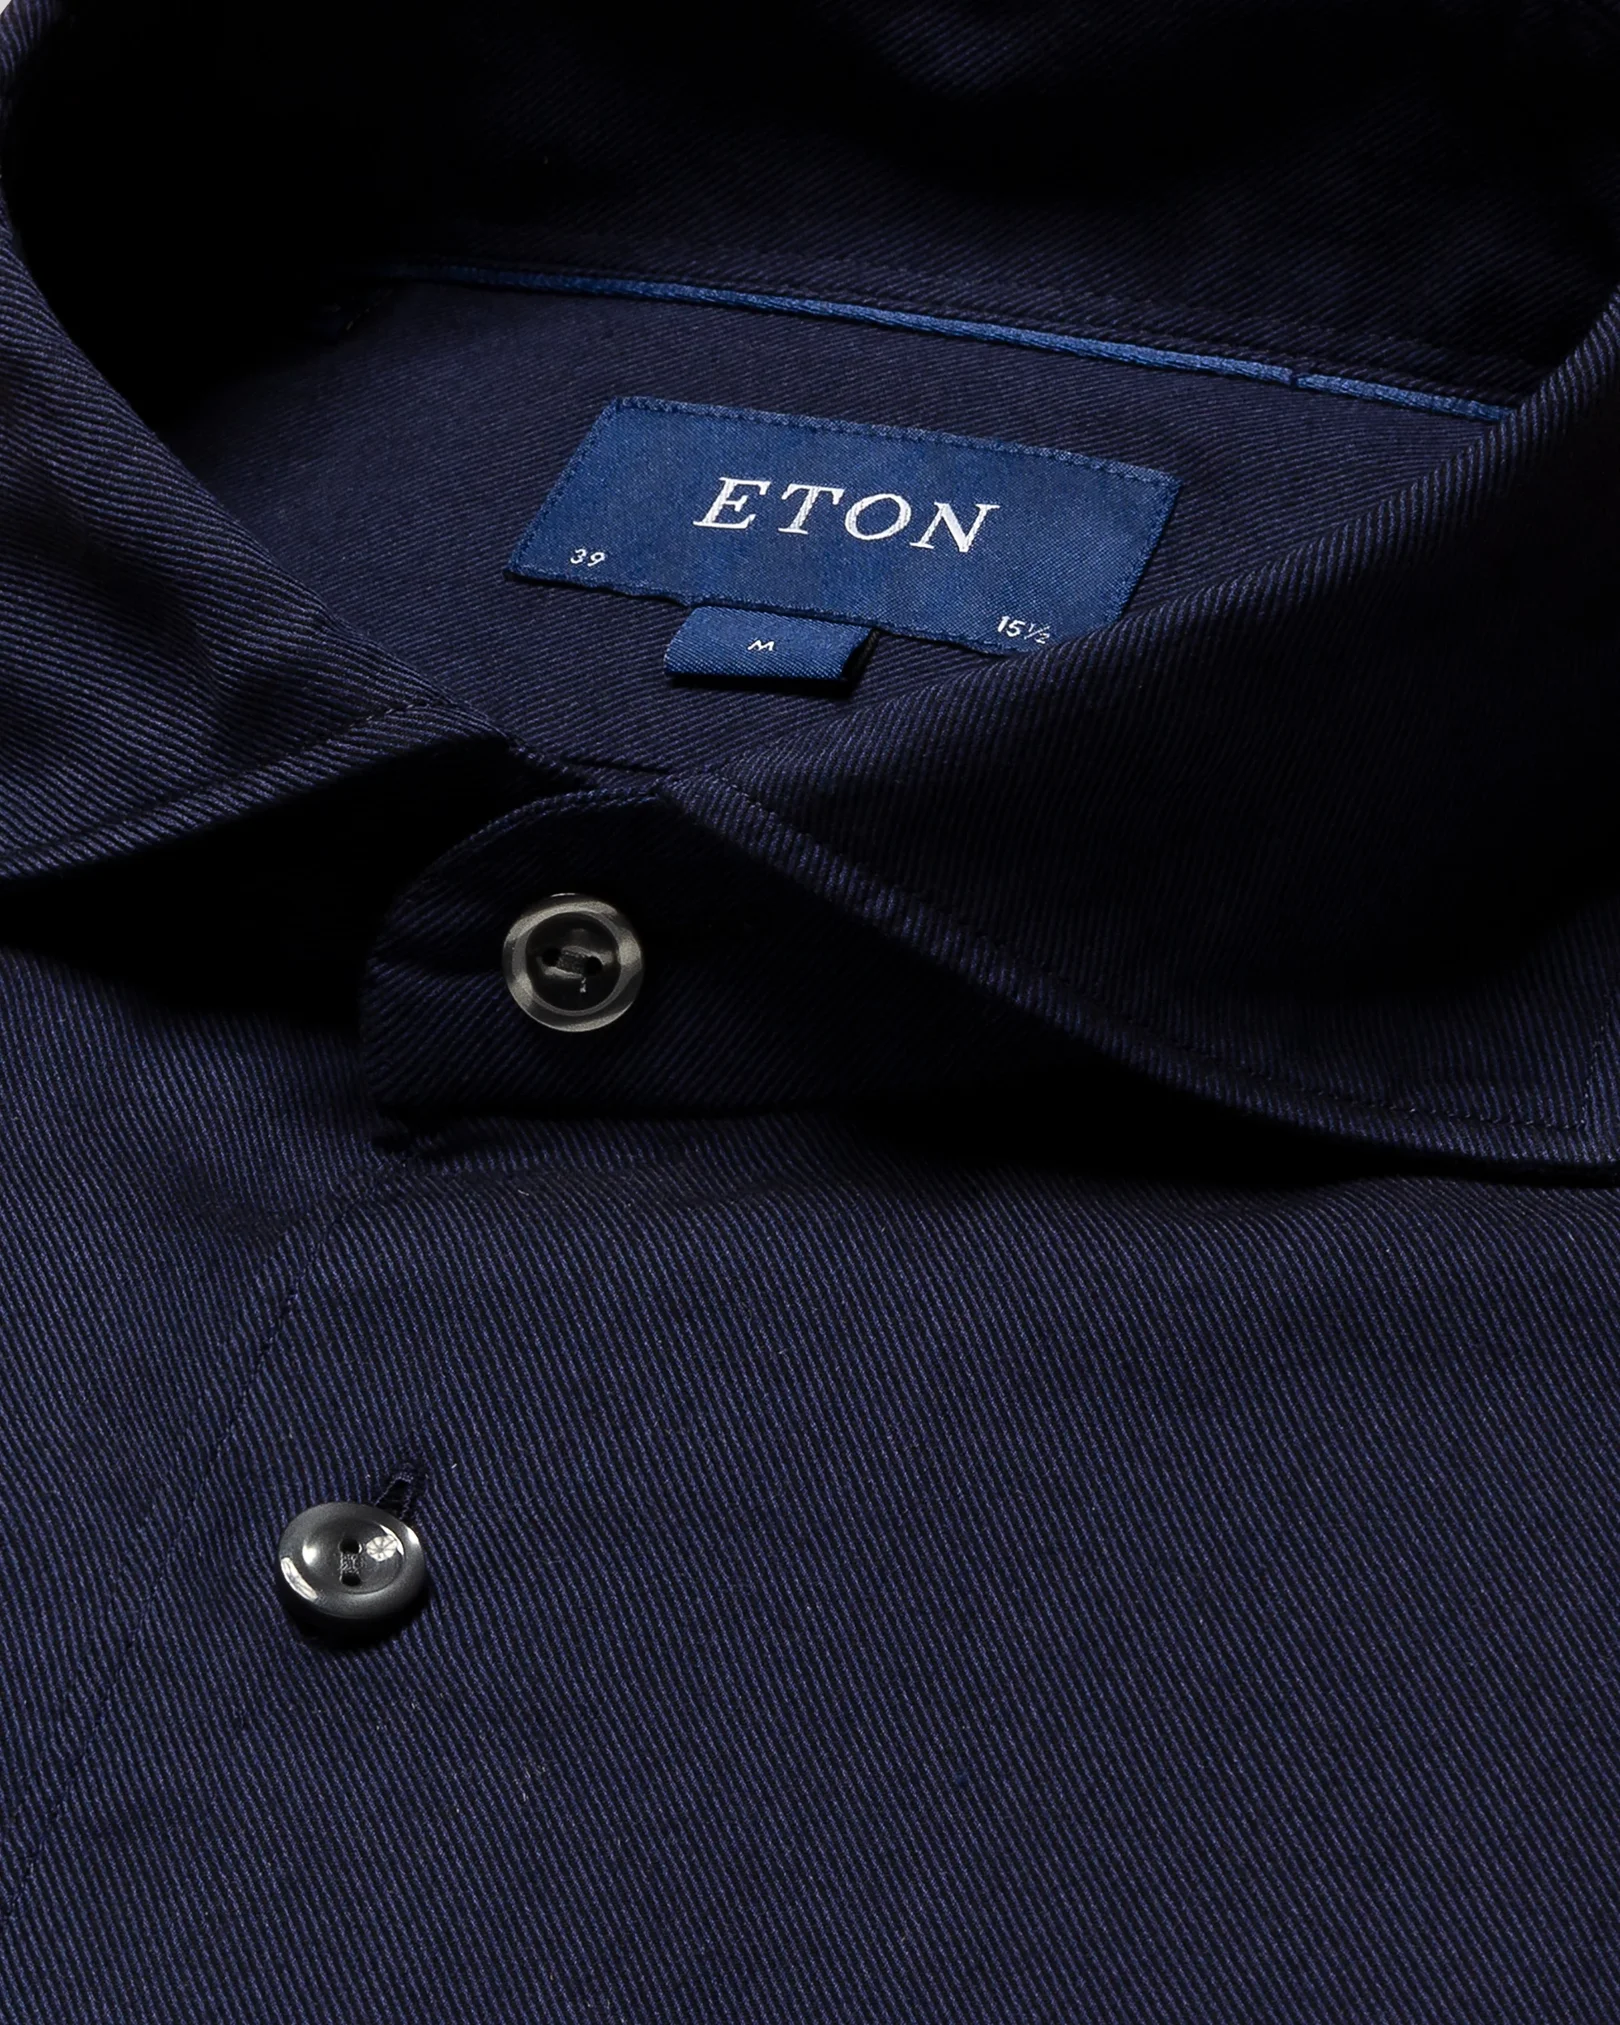 Eton - navy blue cotton tencel flannel